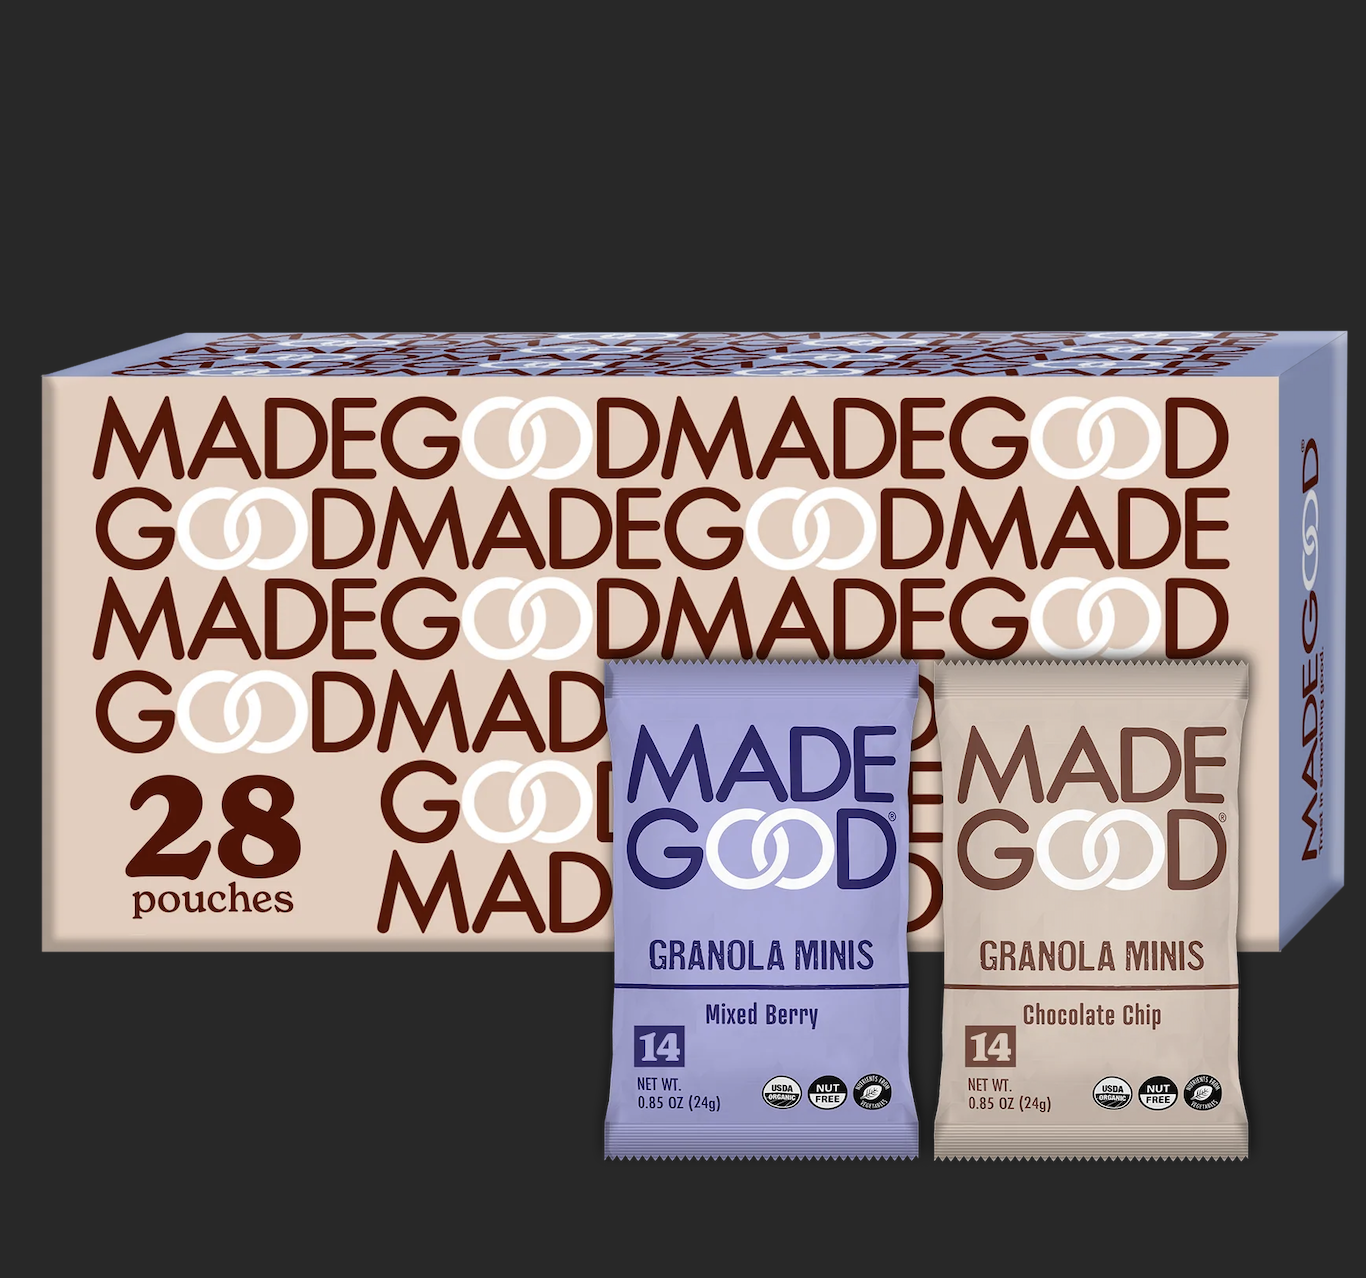 MadeGood Granola Minis